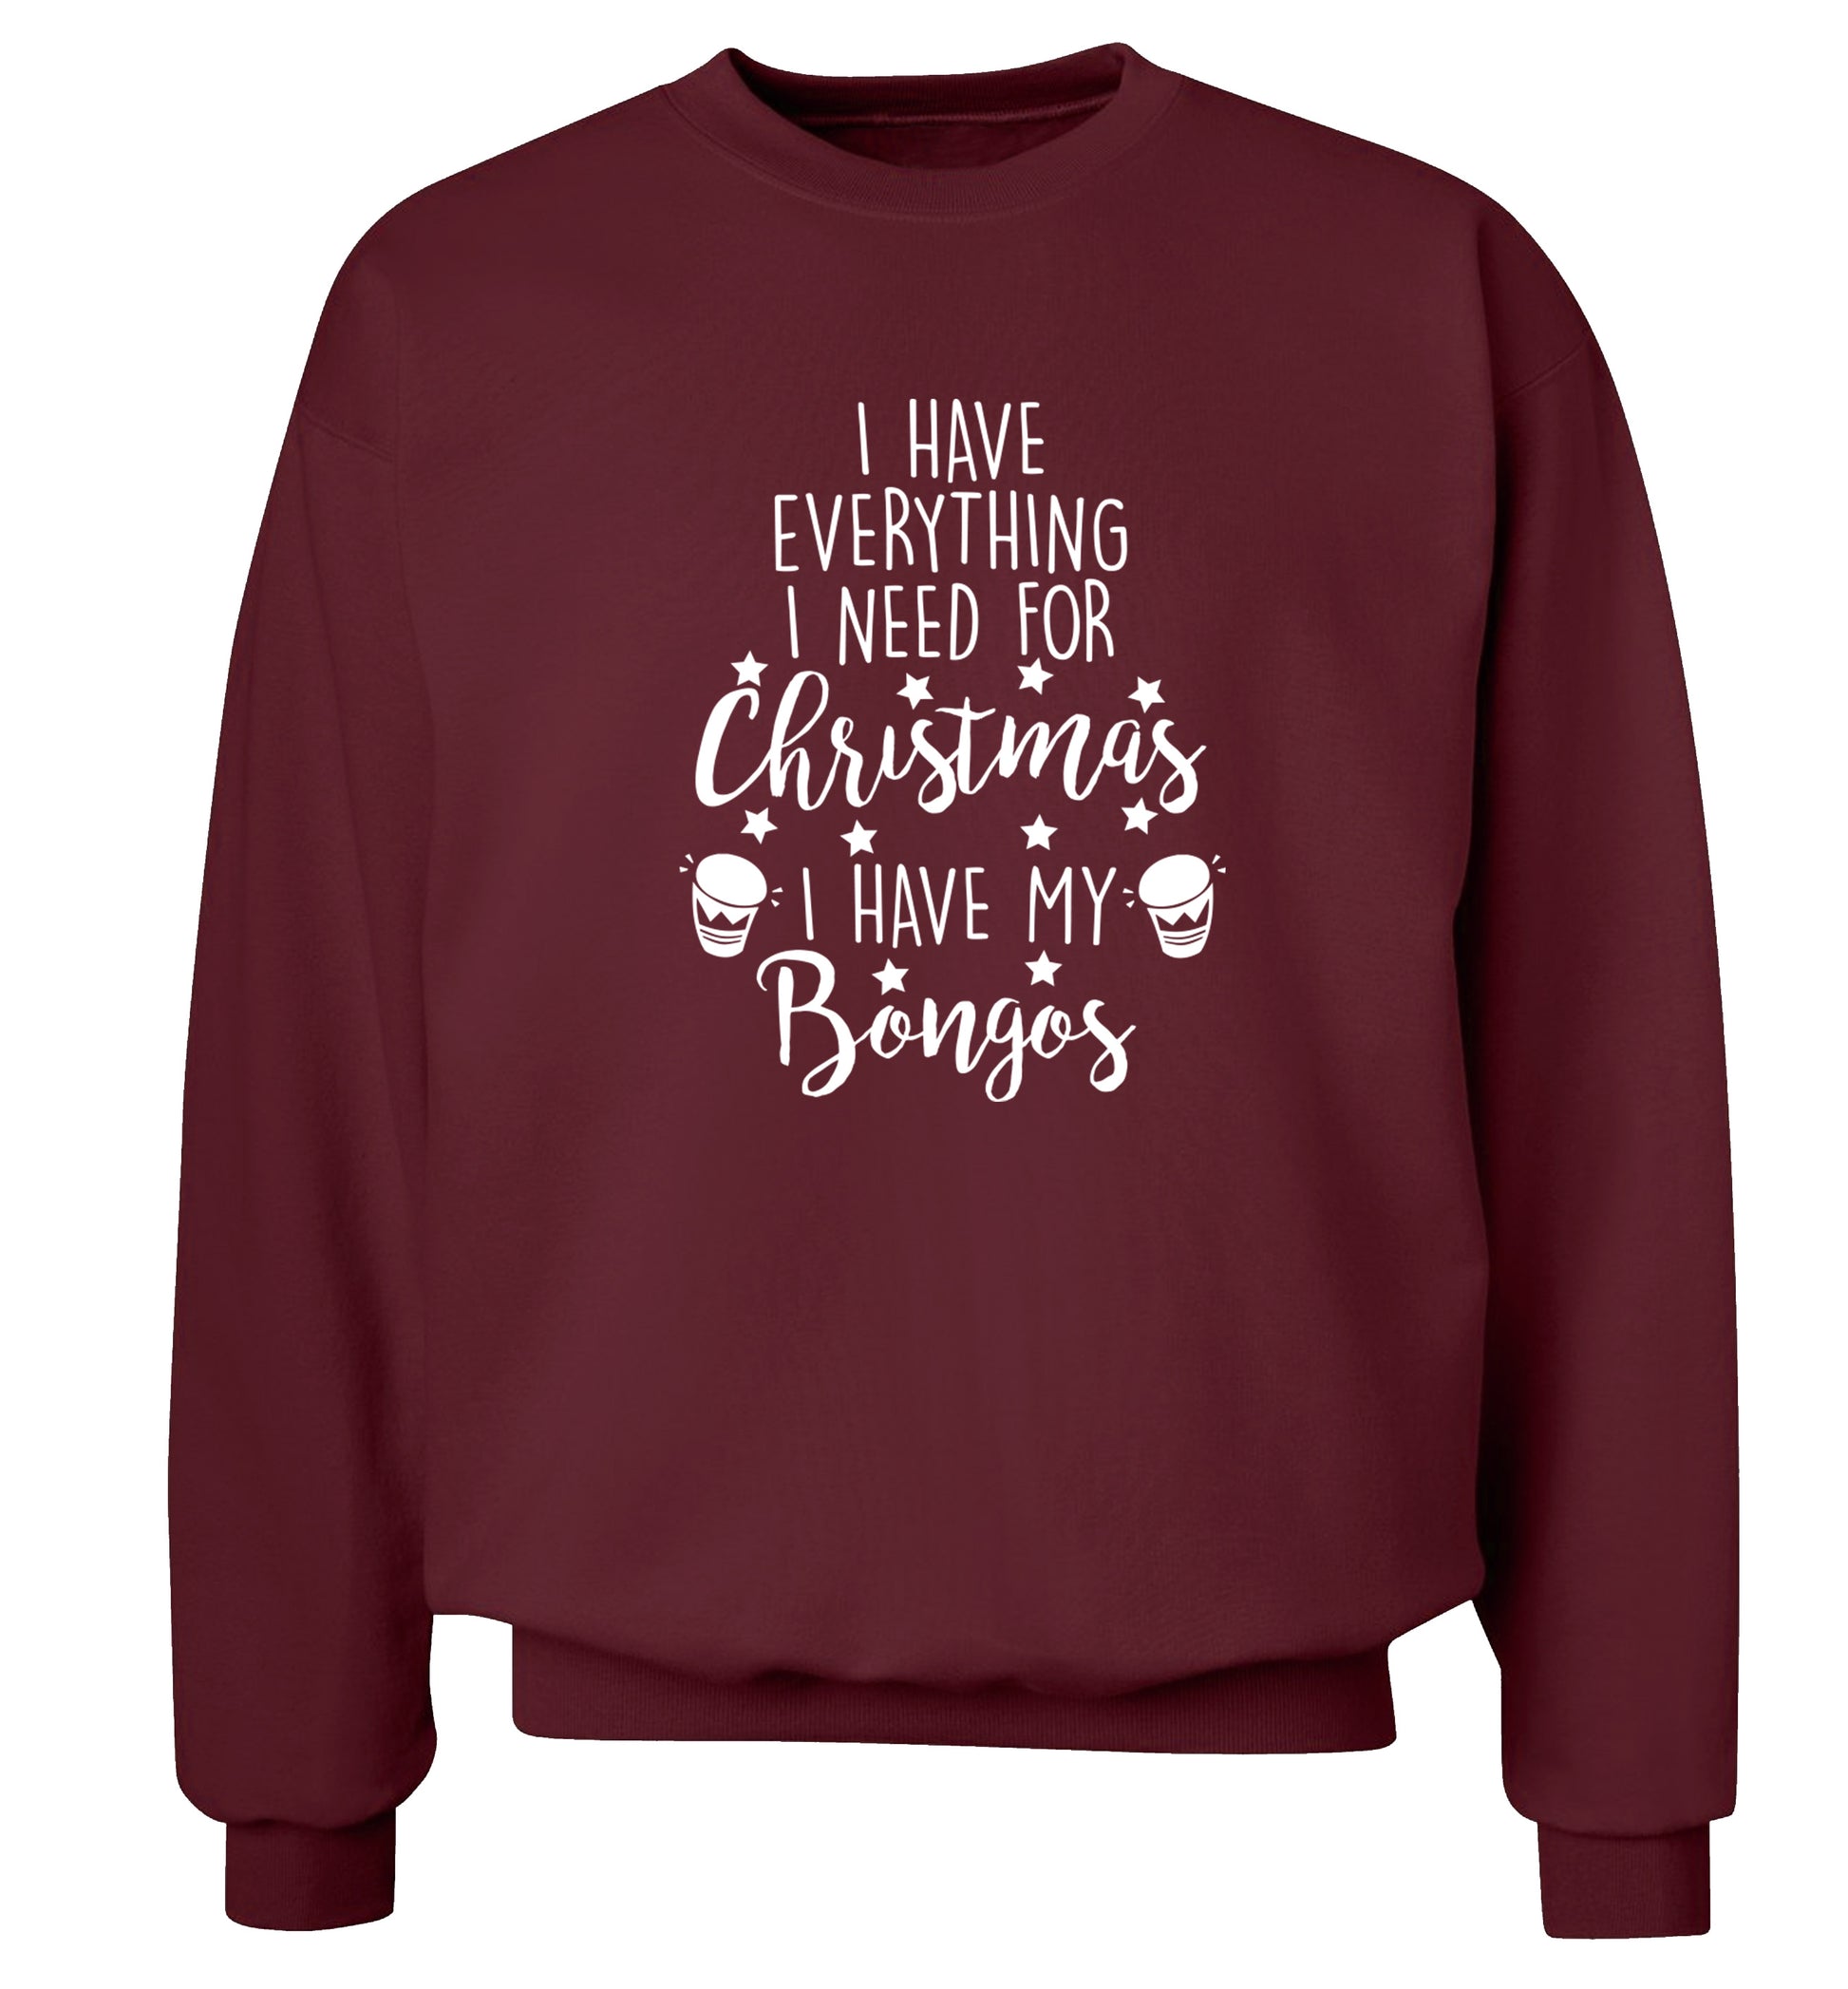 I have everything I need for Christmas I have my bongos! Adult's unisex maroon Sweater 2XL